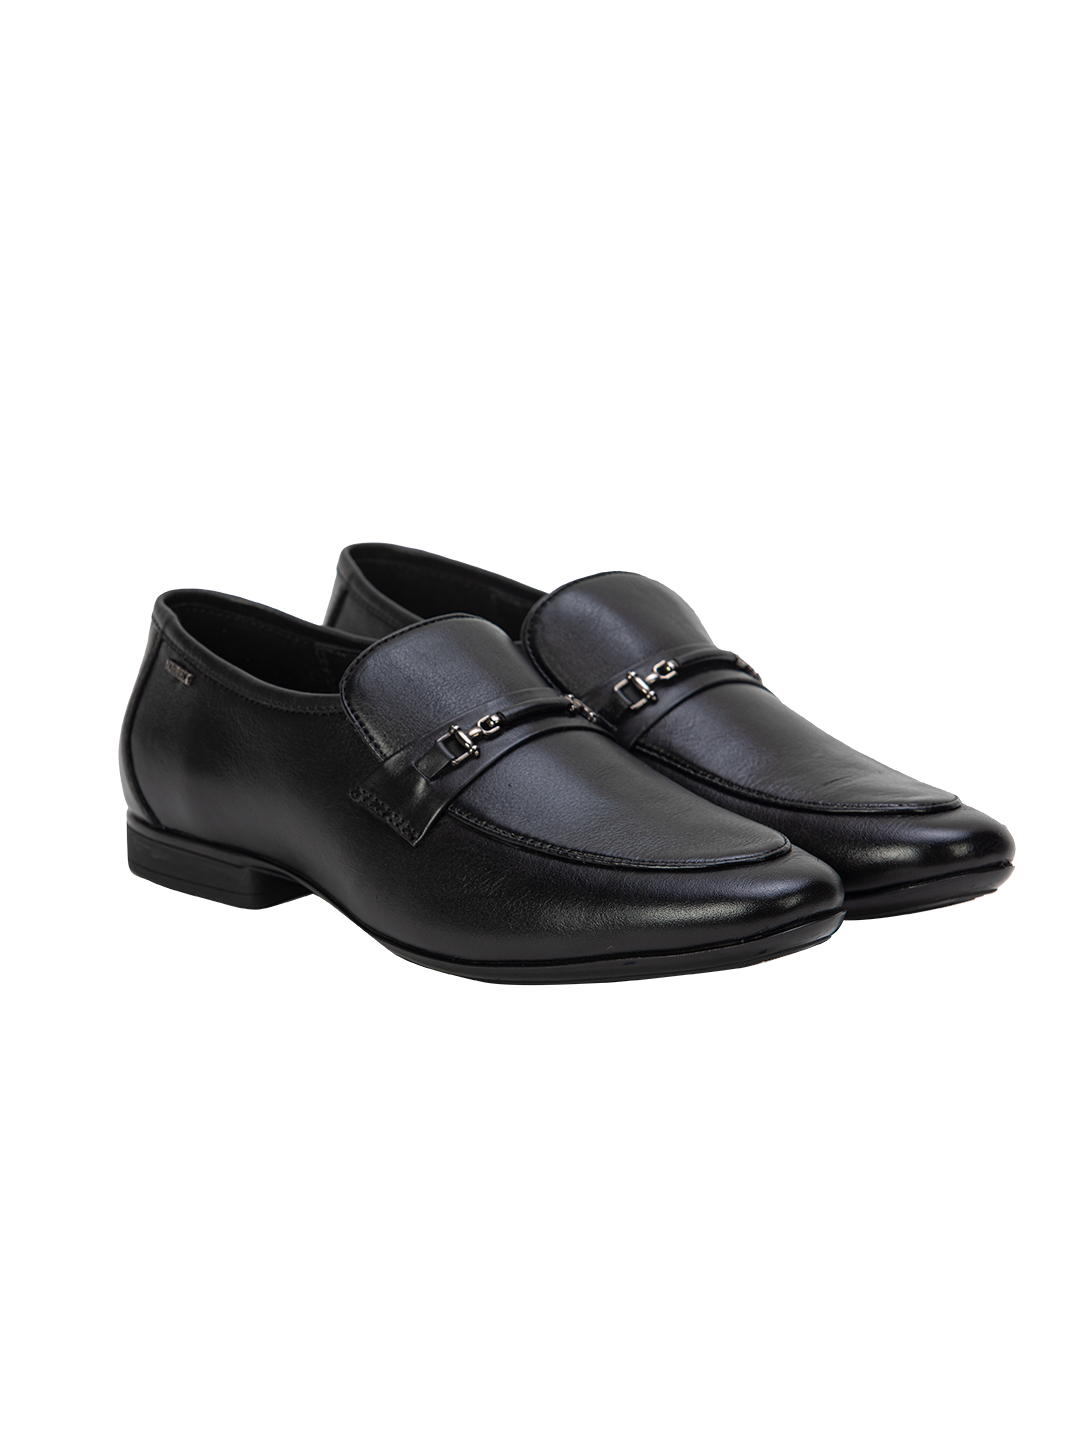 Buy Von Wellx Germany Comfort Black Glib Shoes Online in Jeddah